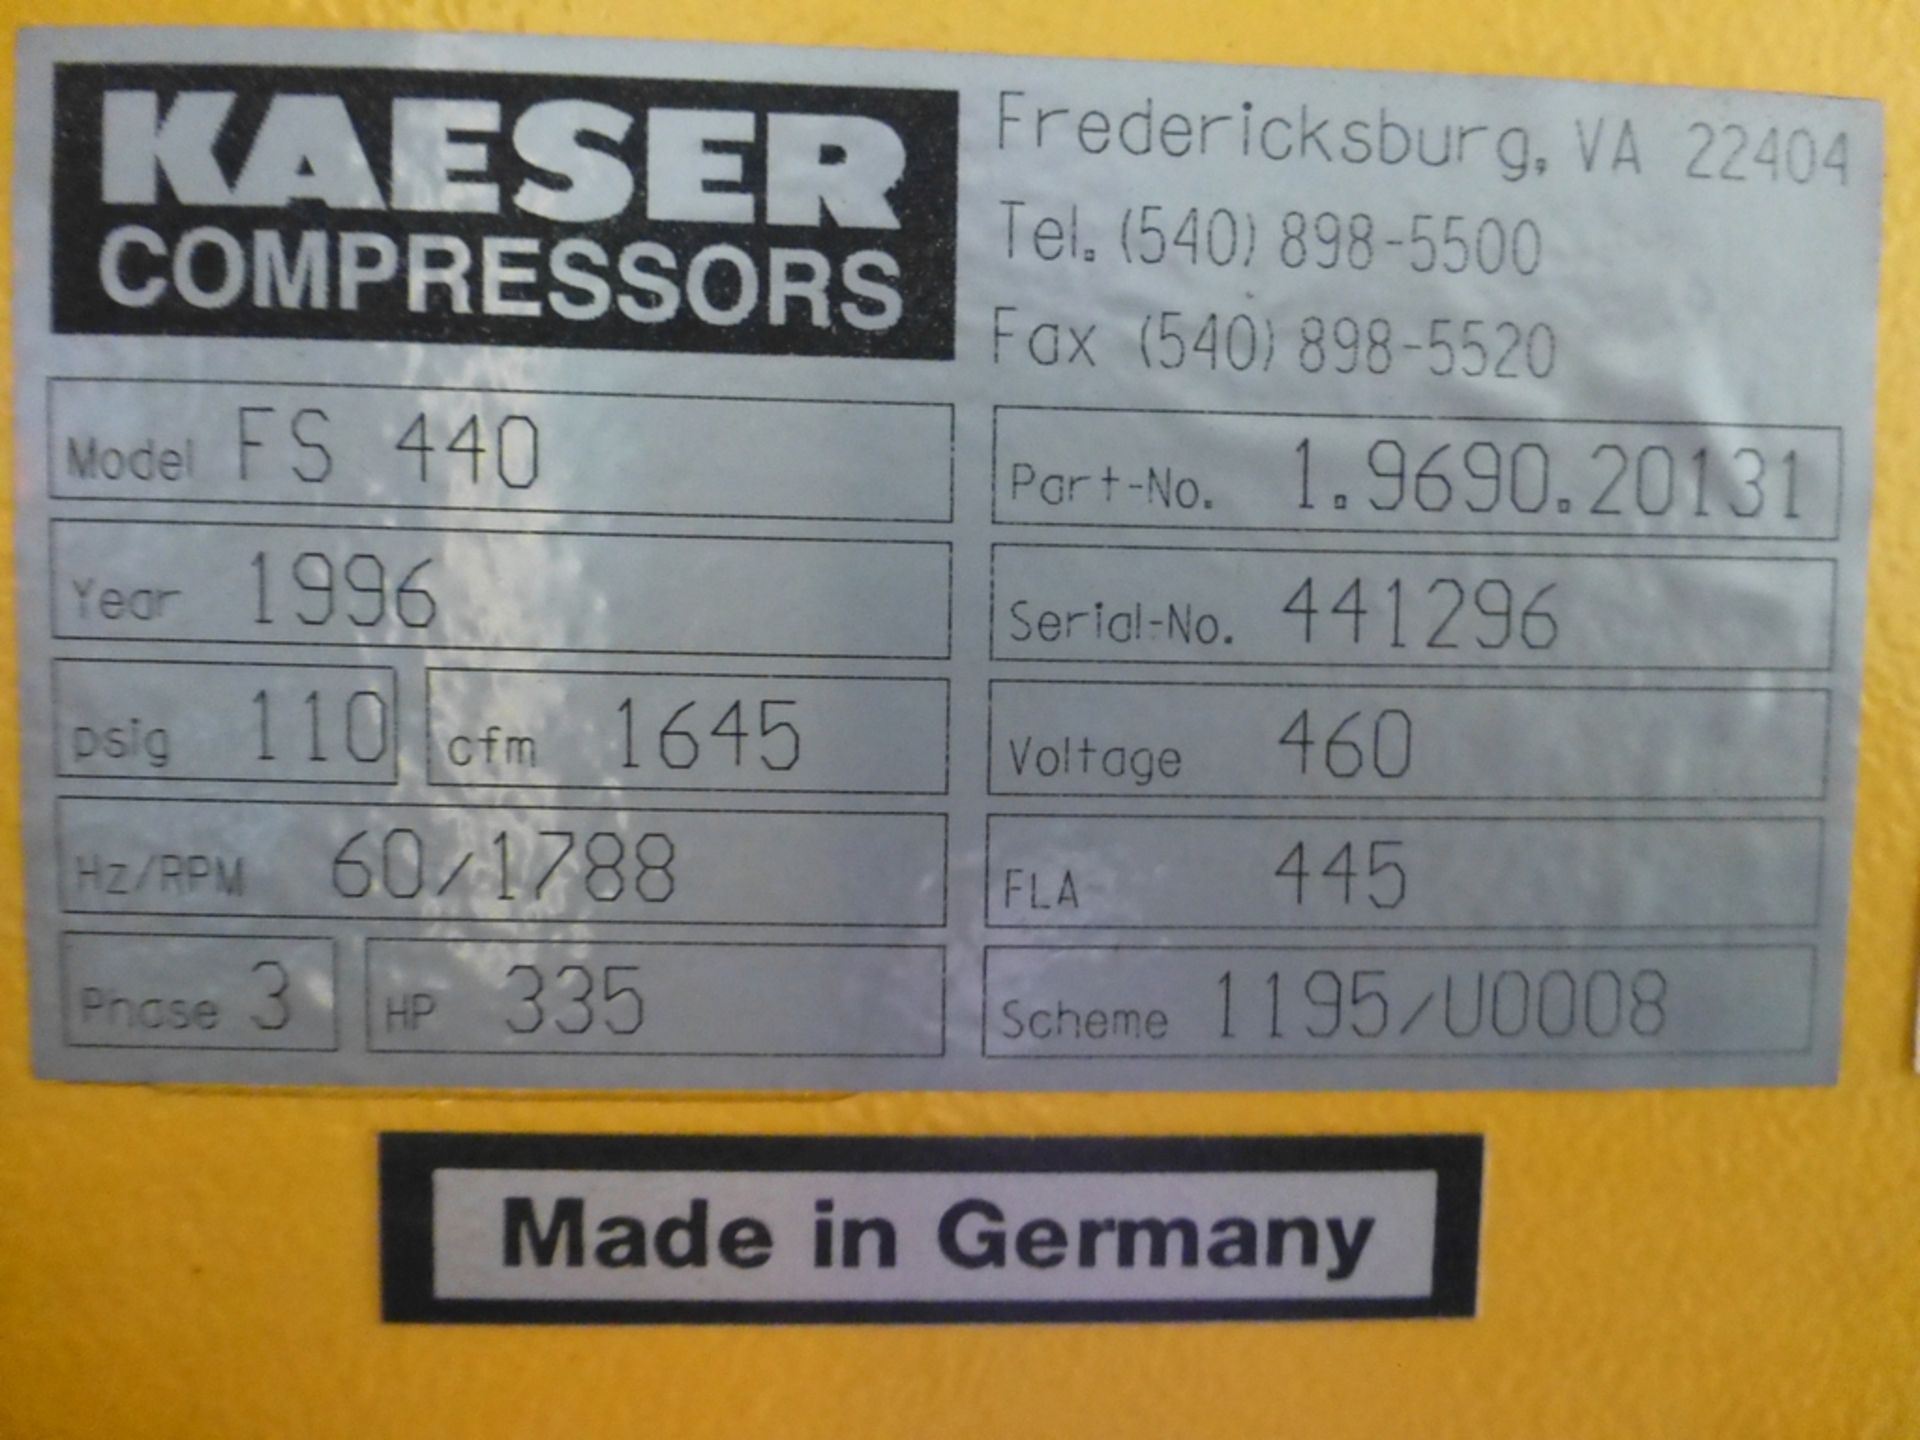 Kaeser 335 HP Air Compressor|Model No. FS440; 110 PSI; 1,645 CFM; S/N 441296; Service Hours: 101, - Image 13 of 13